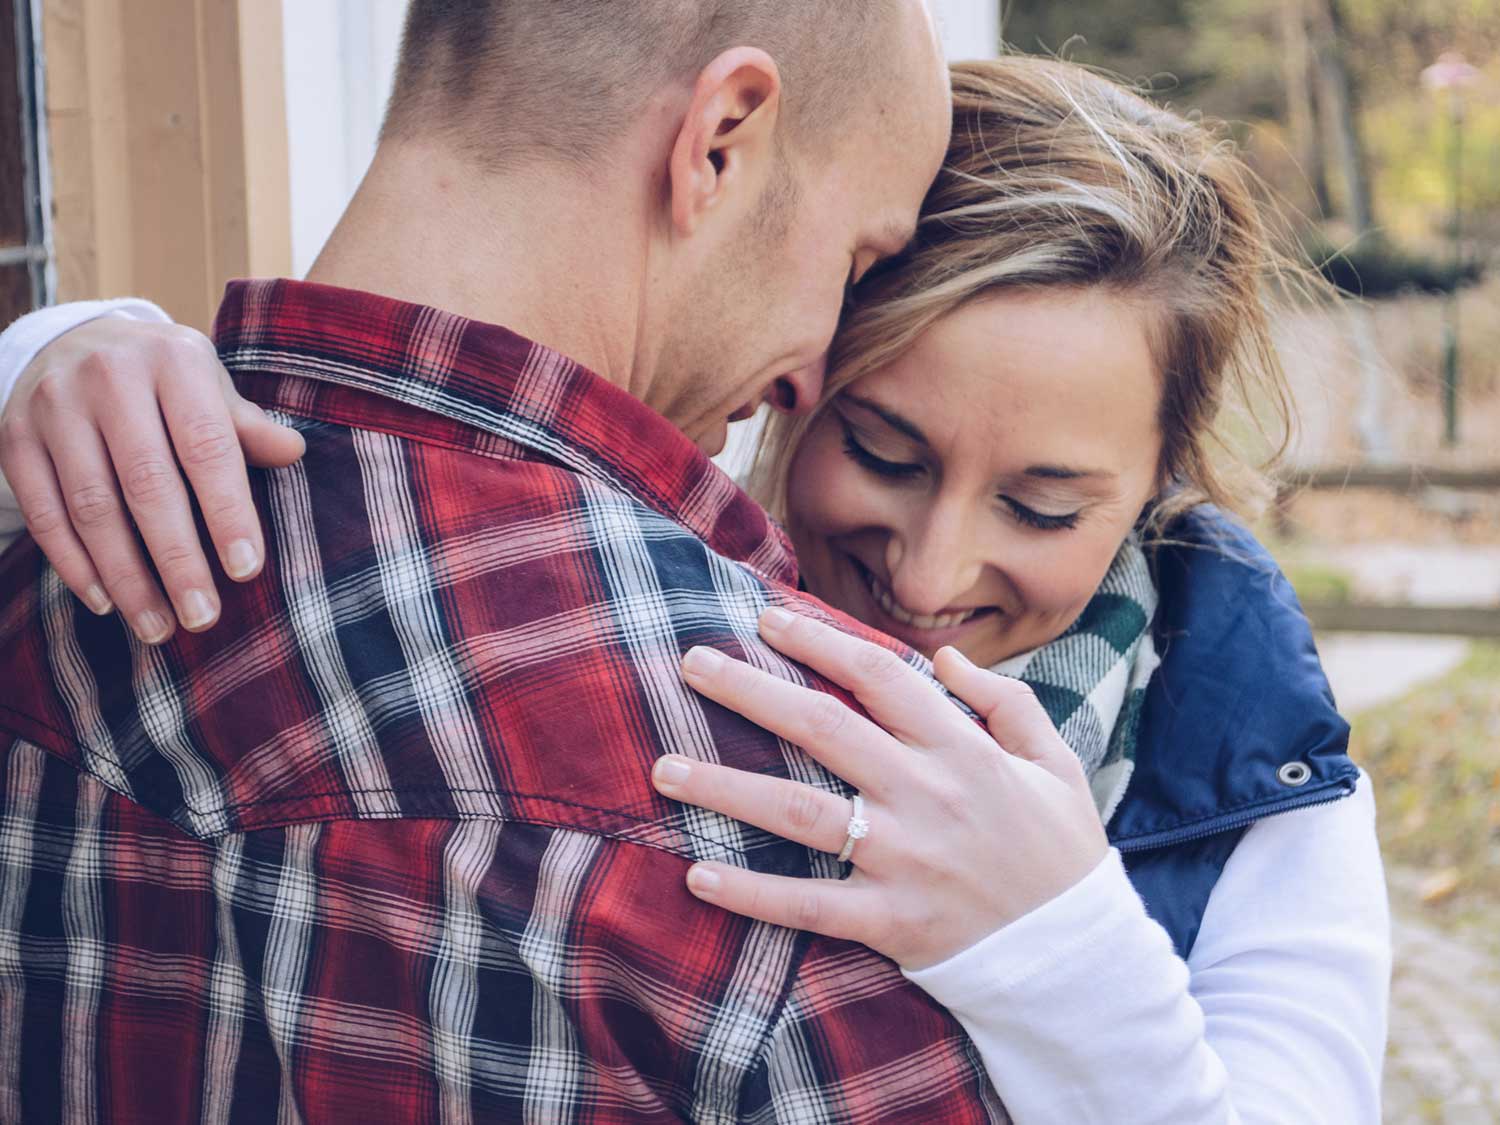 Woman hugging man wearing flannel shirt.